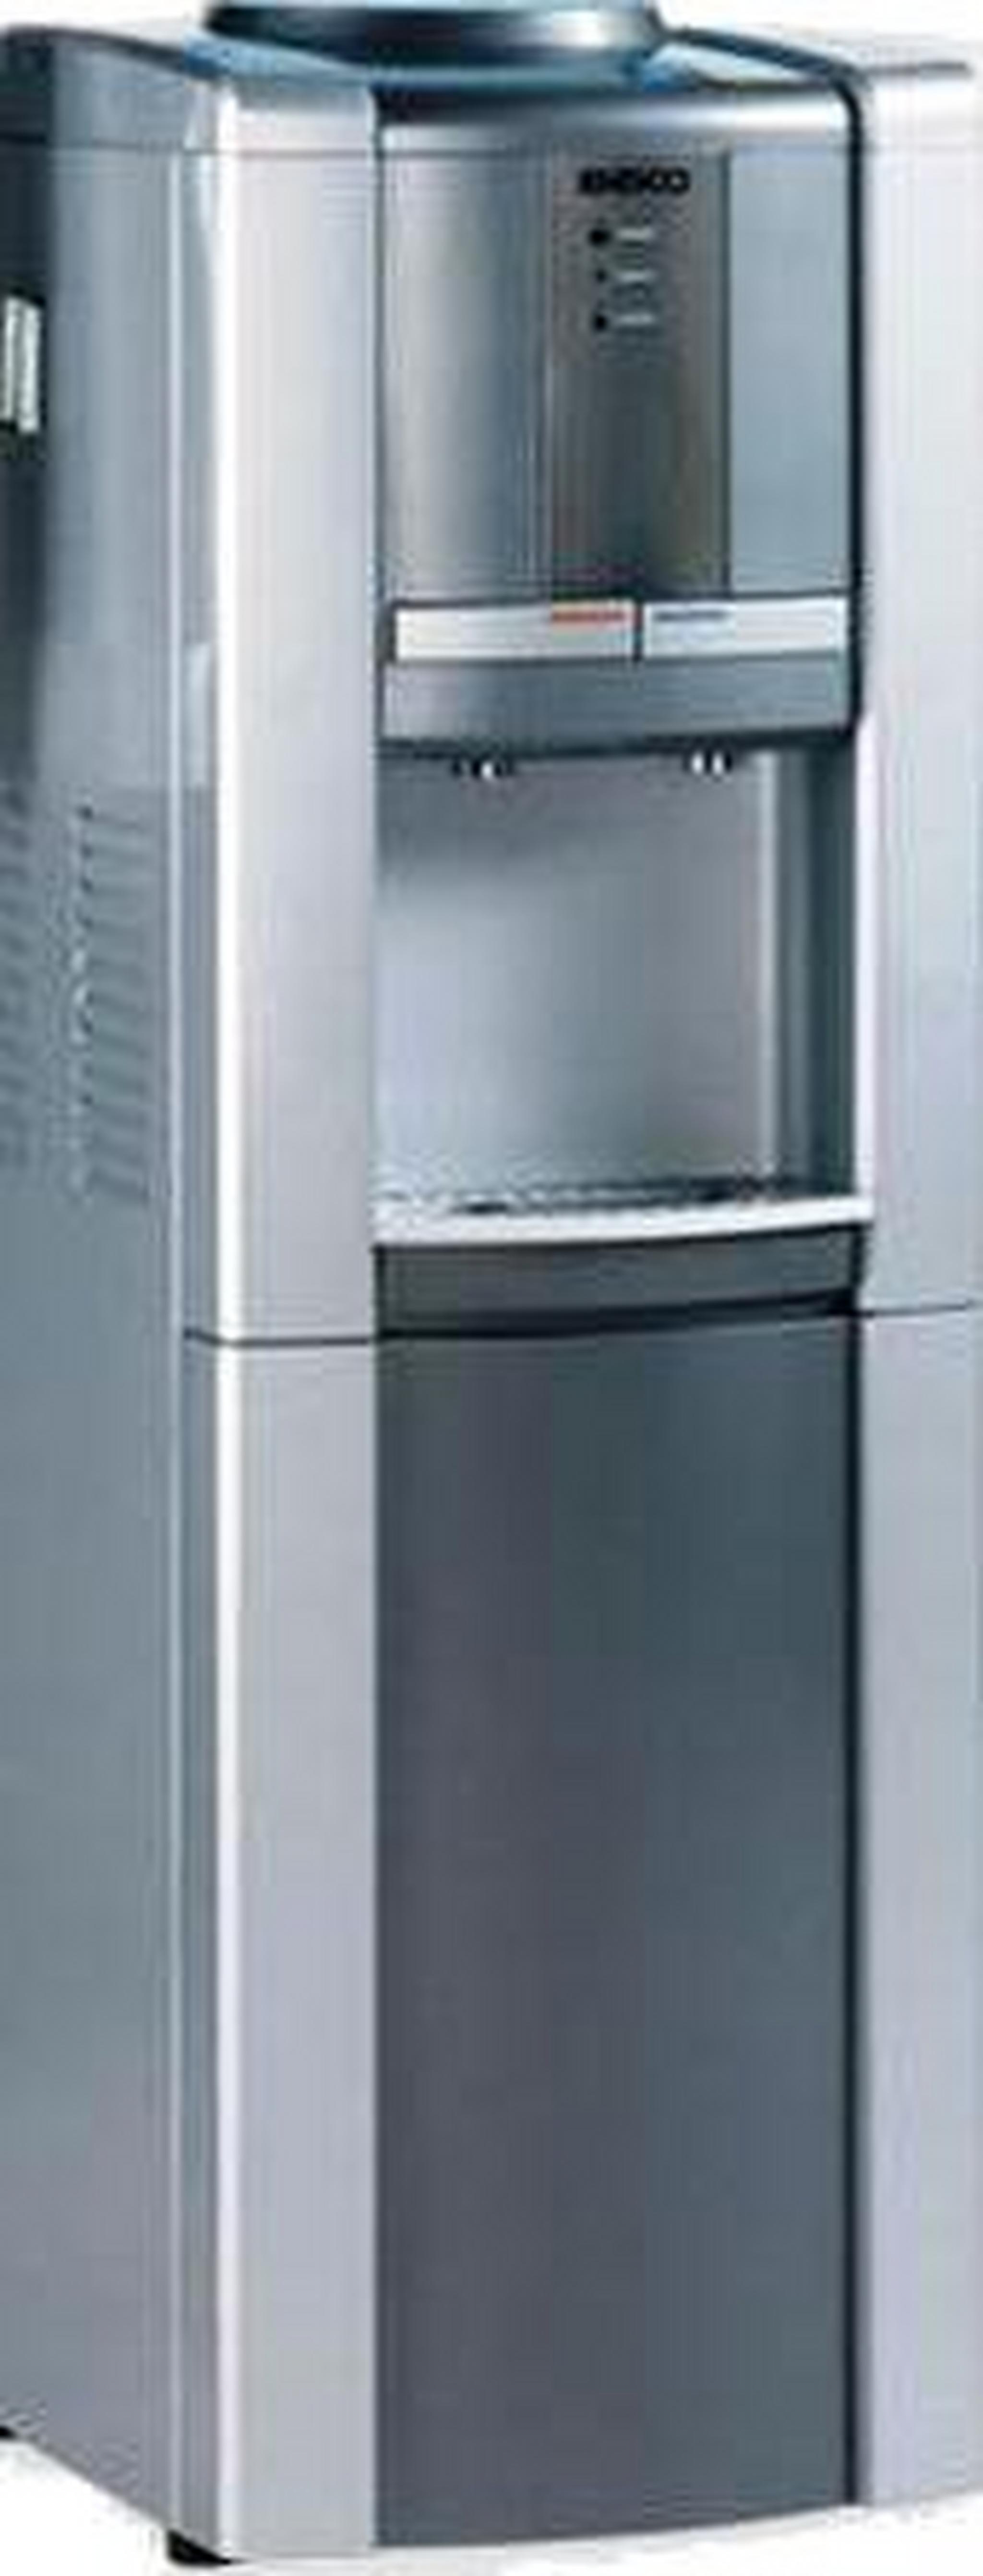 Beko Water Dispenser - Silver